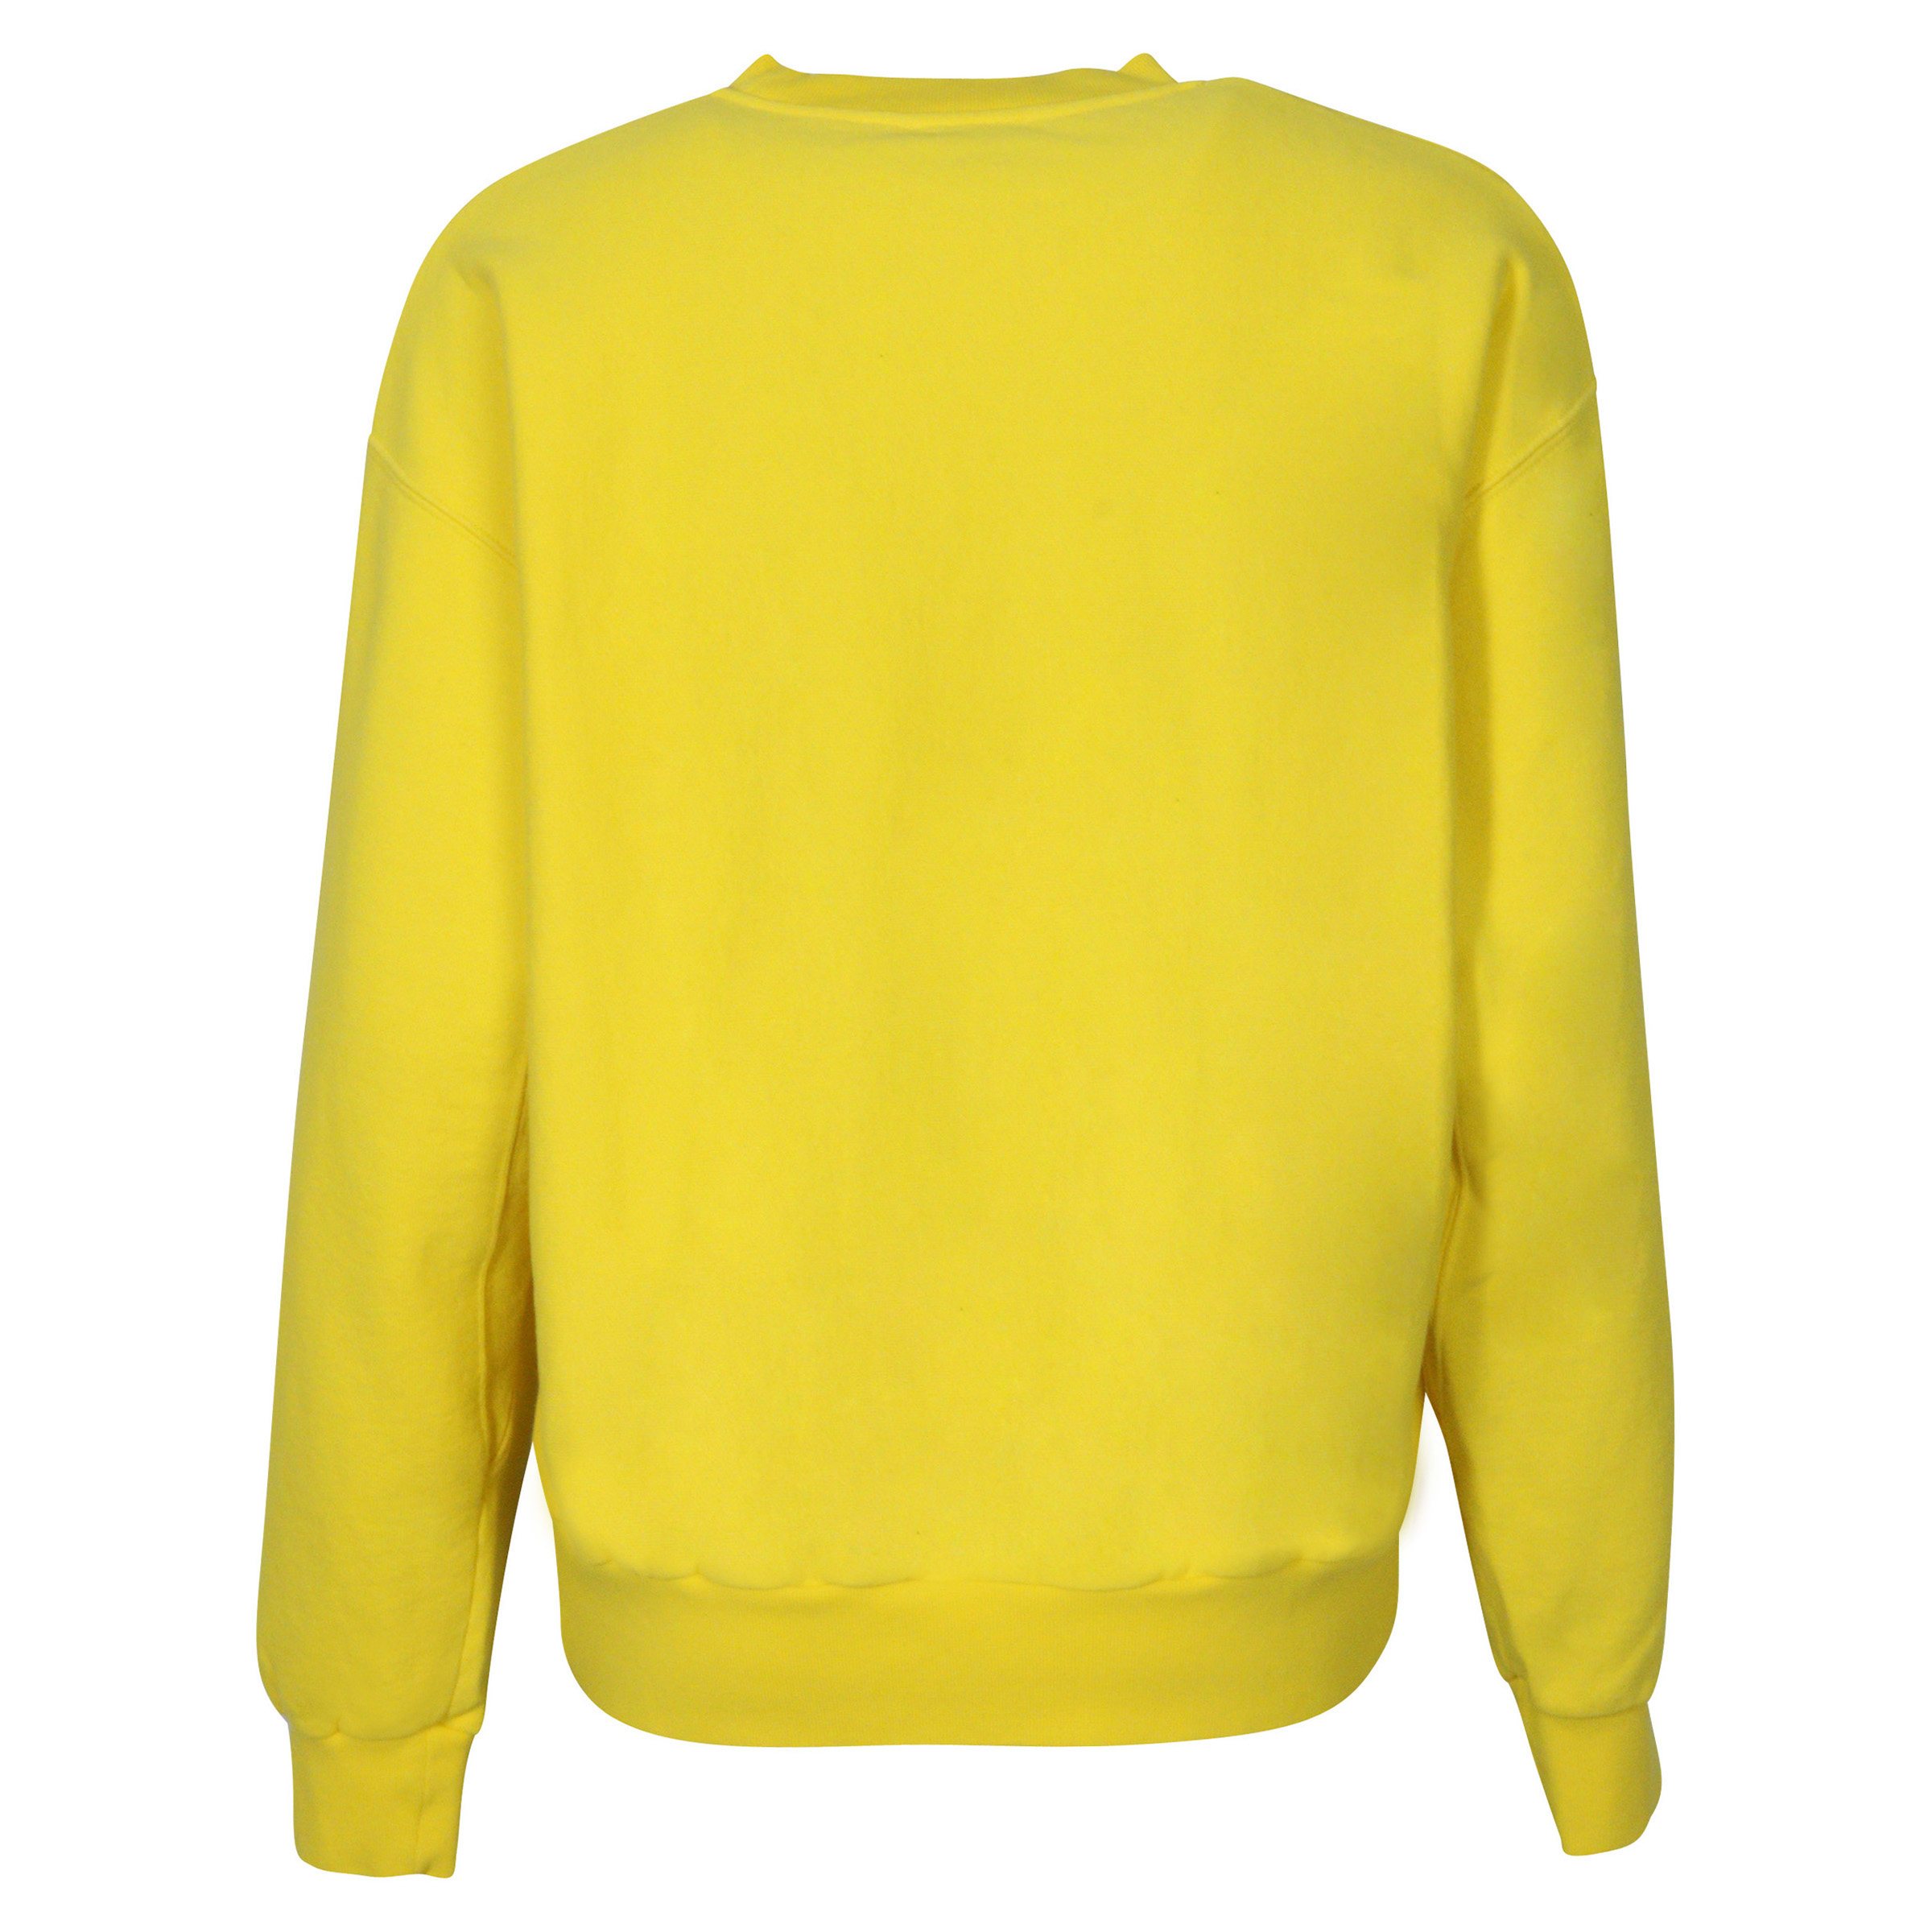 Aries Classic Temple Sweatshirt Yellow XL